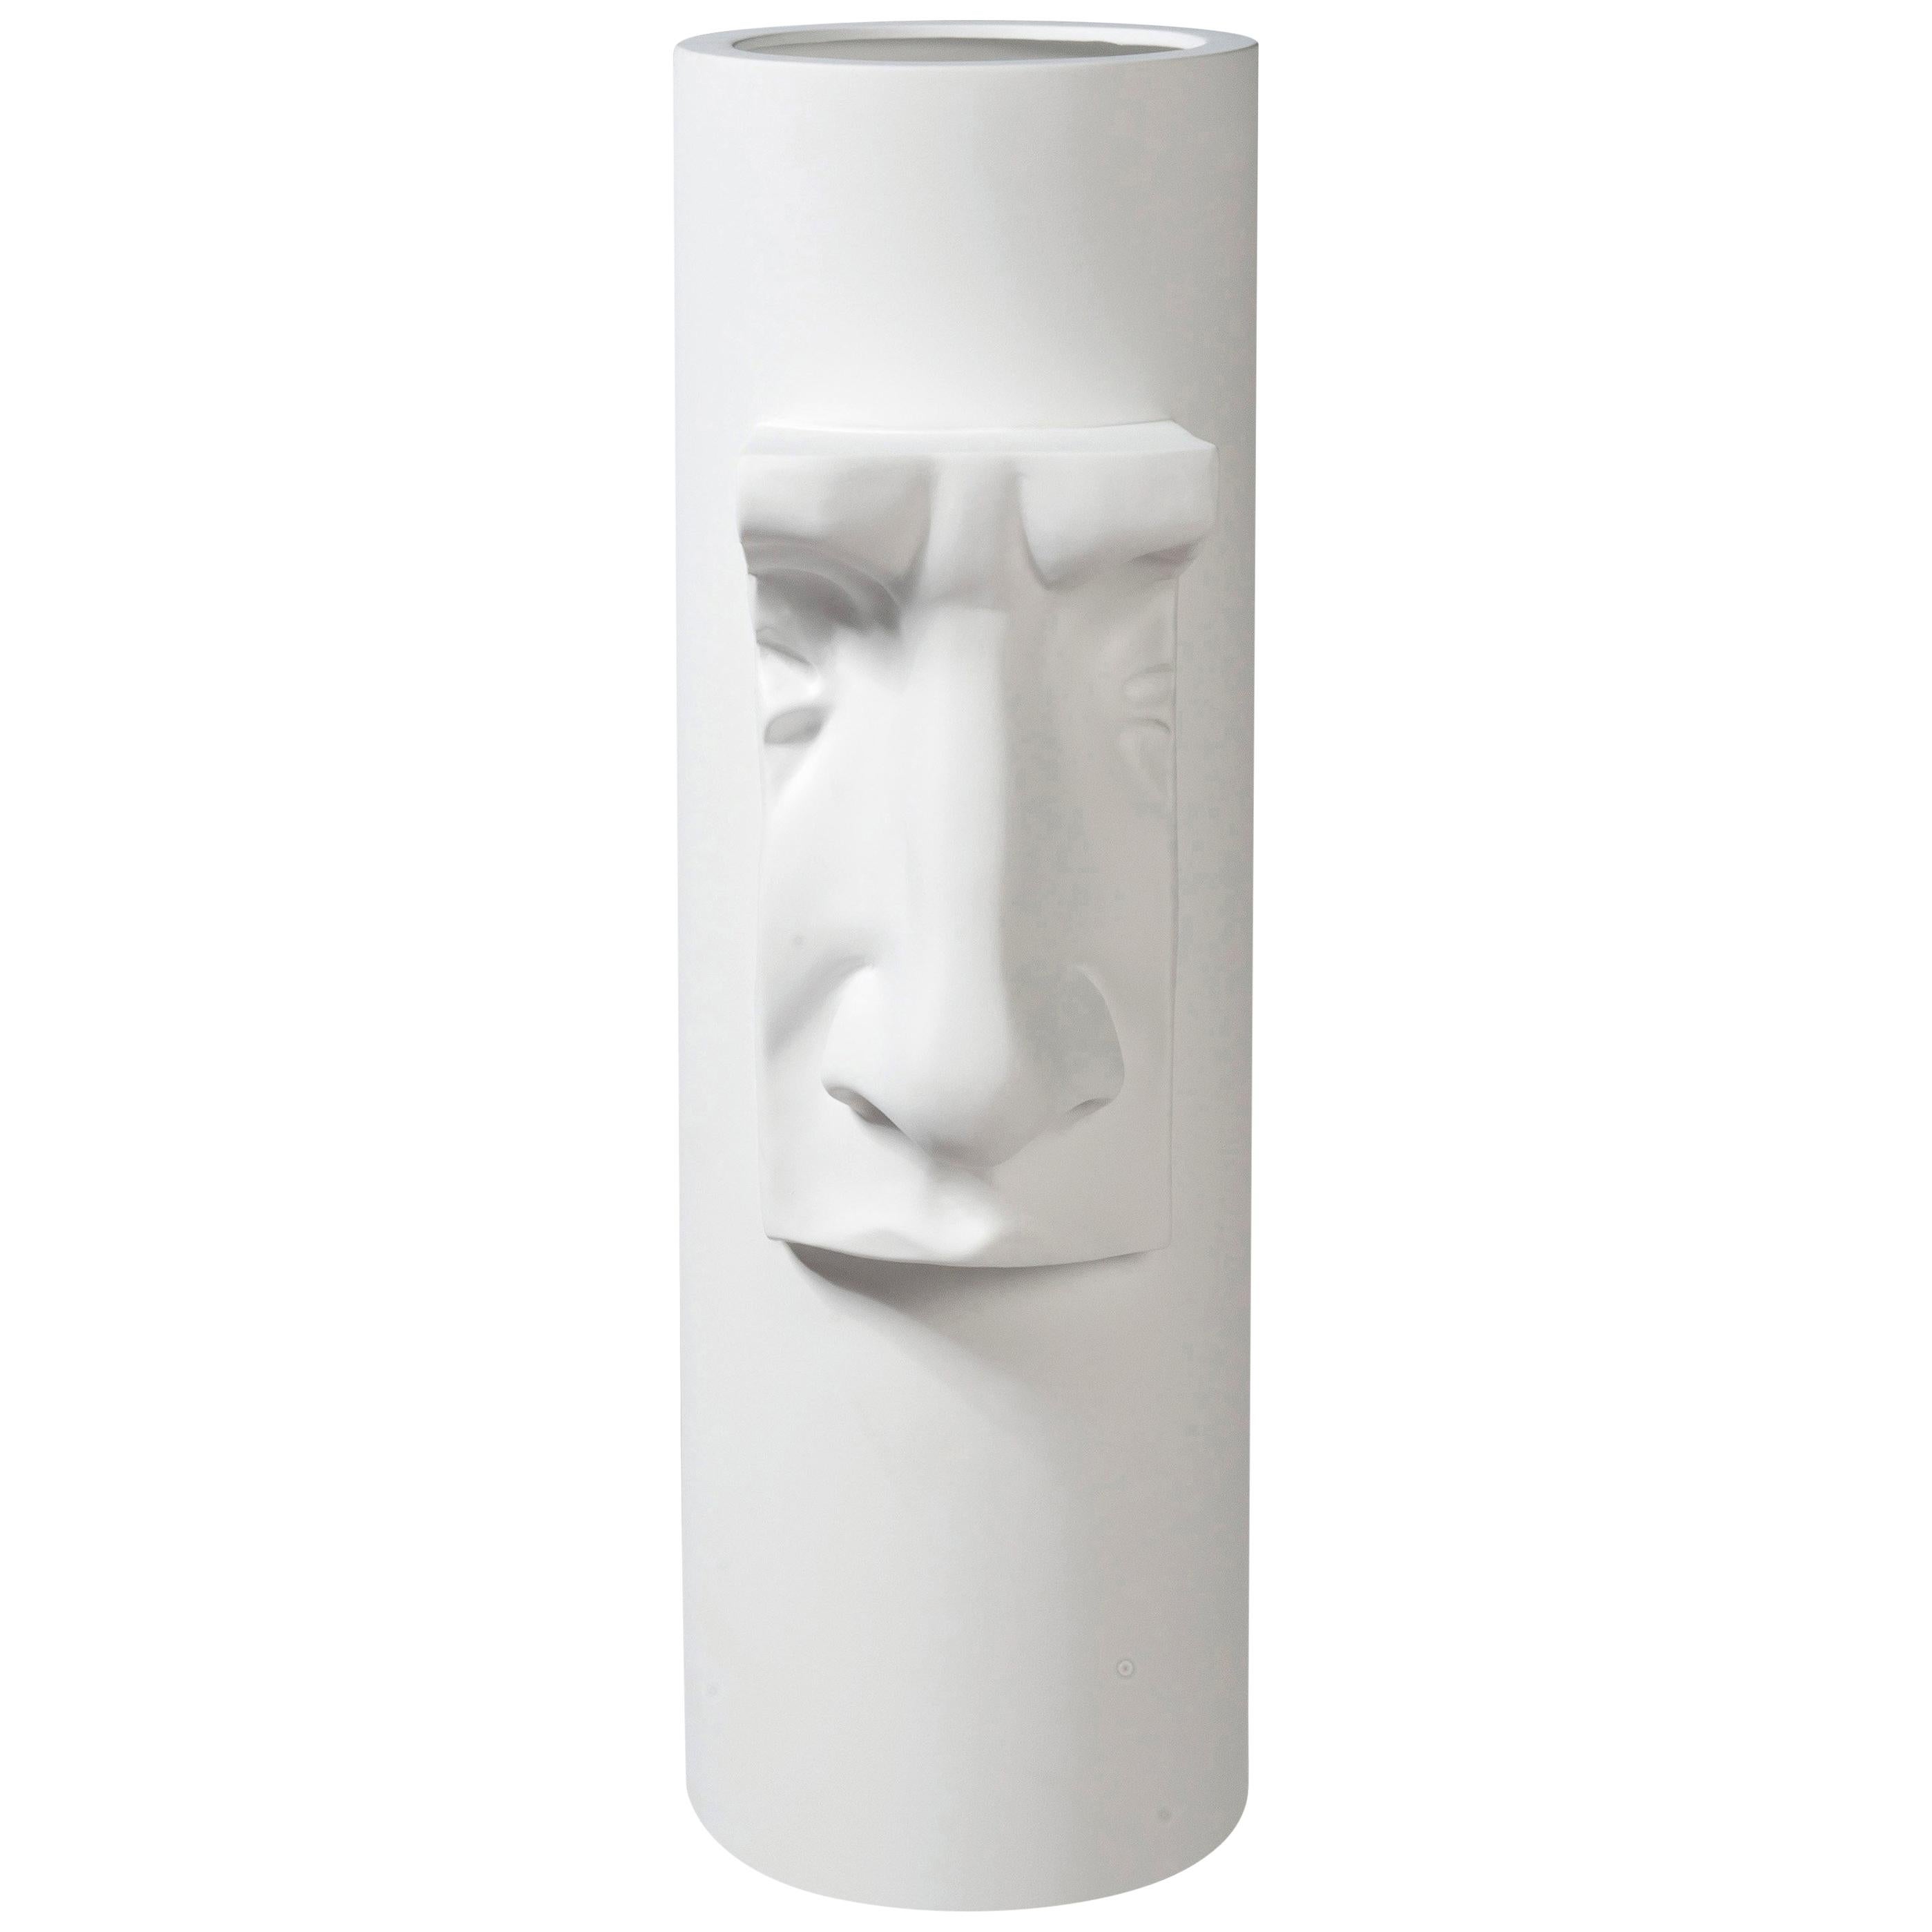 Vase 'David by Michelangelo' Nose Small, Matt White Ceramic, Italy For Sale